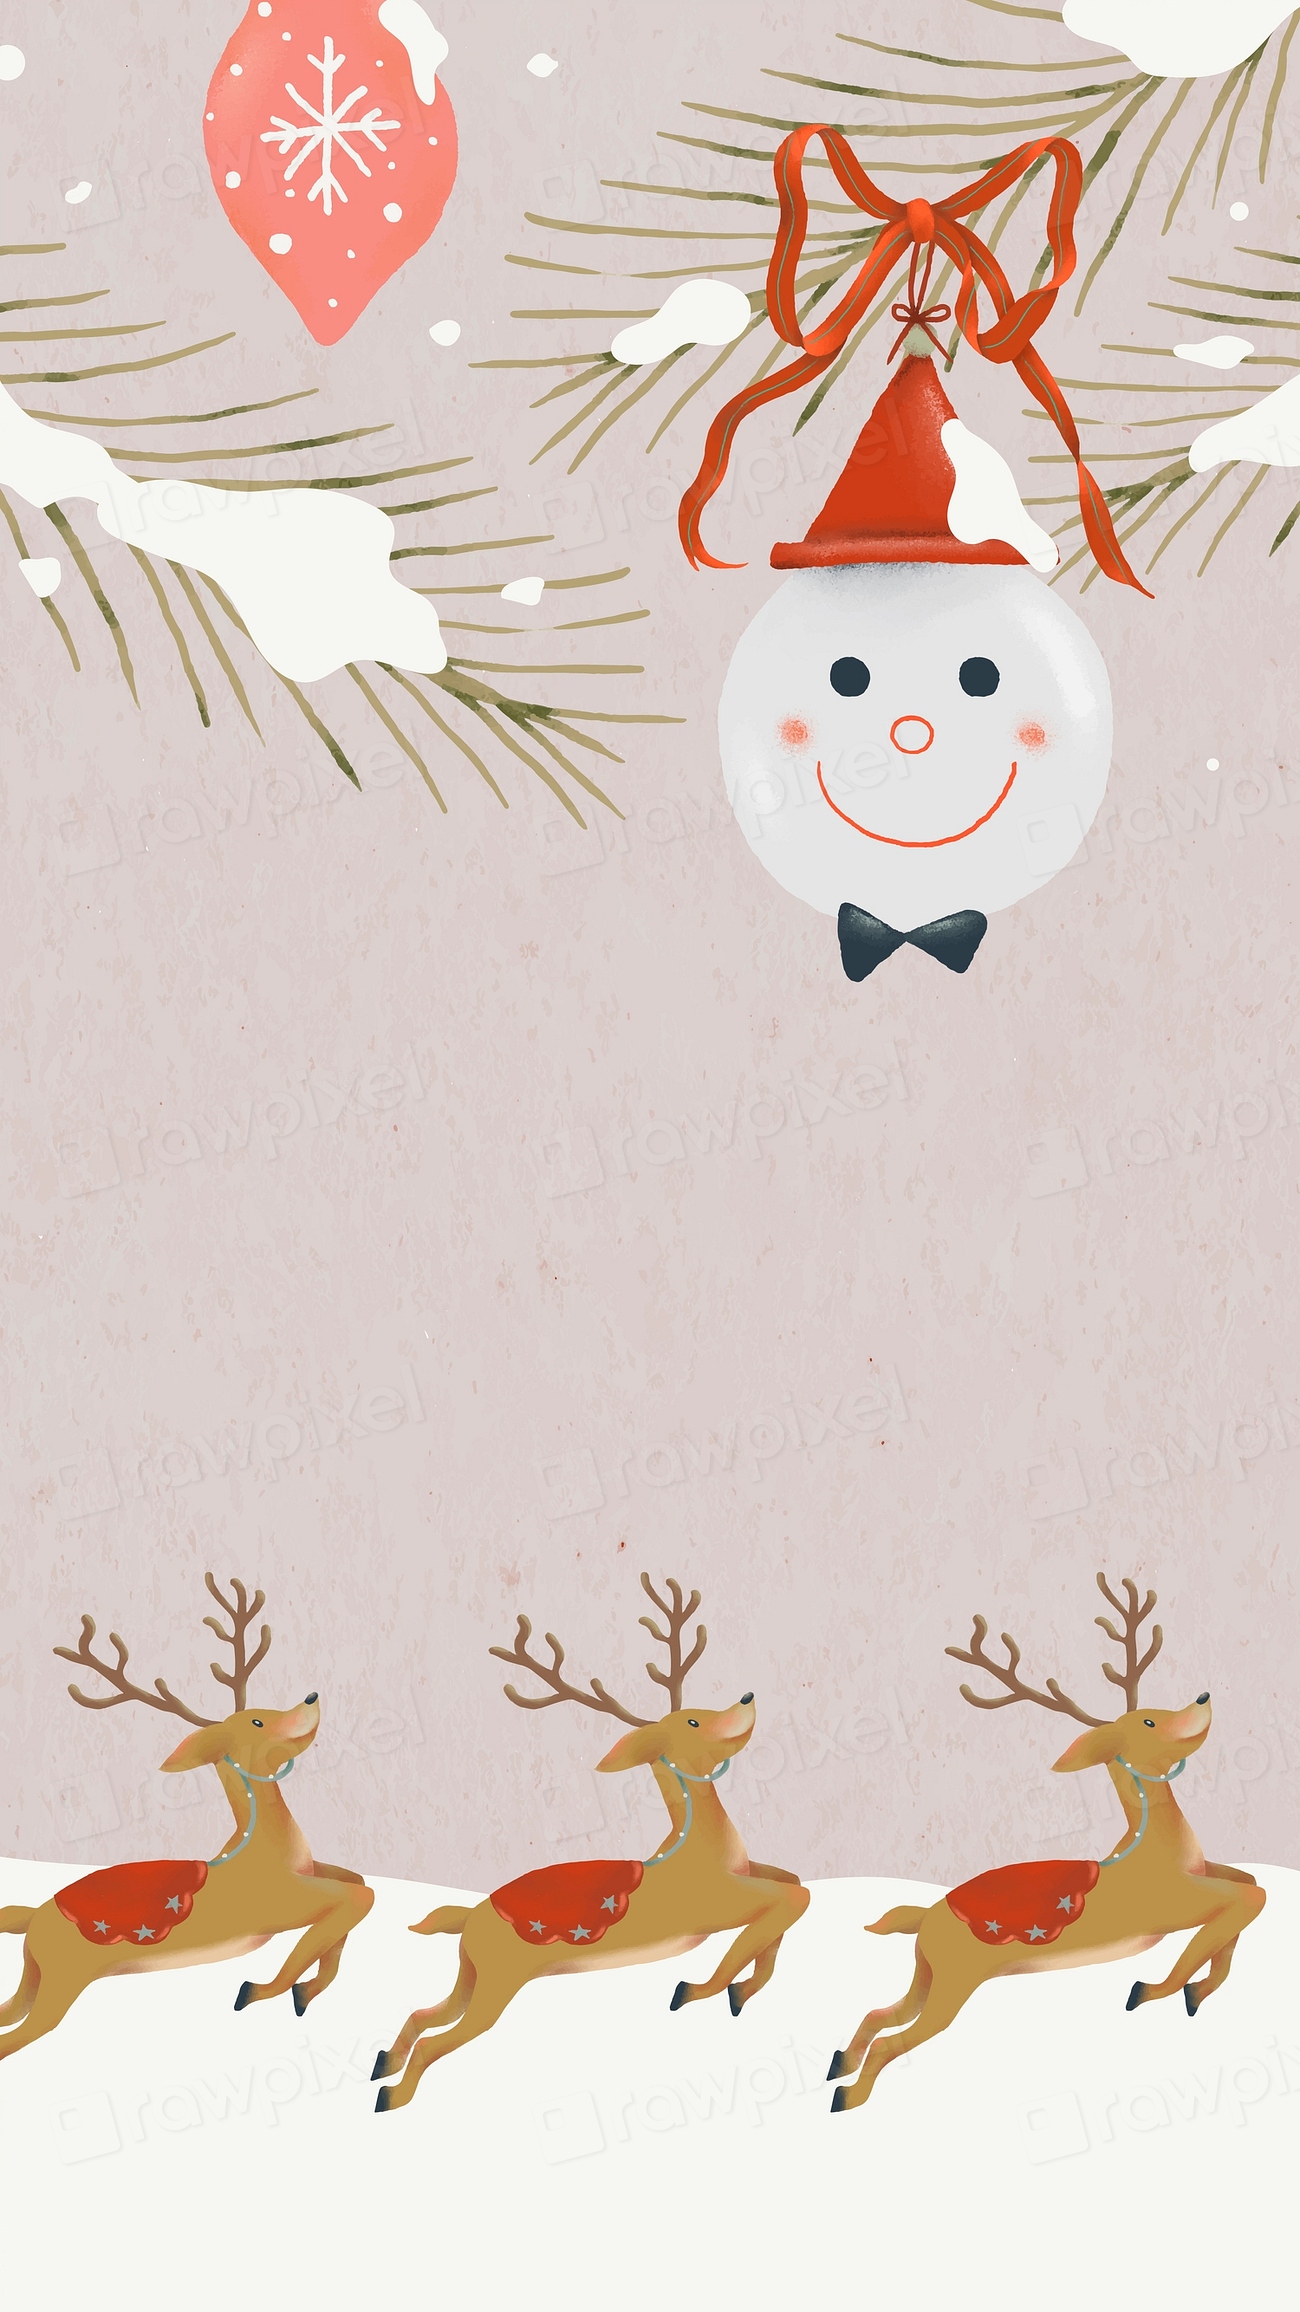 Winter iPhone wallpaper, Christmas holidays | Free Photo Illustration ...